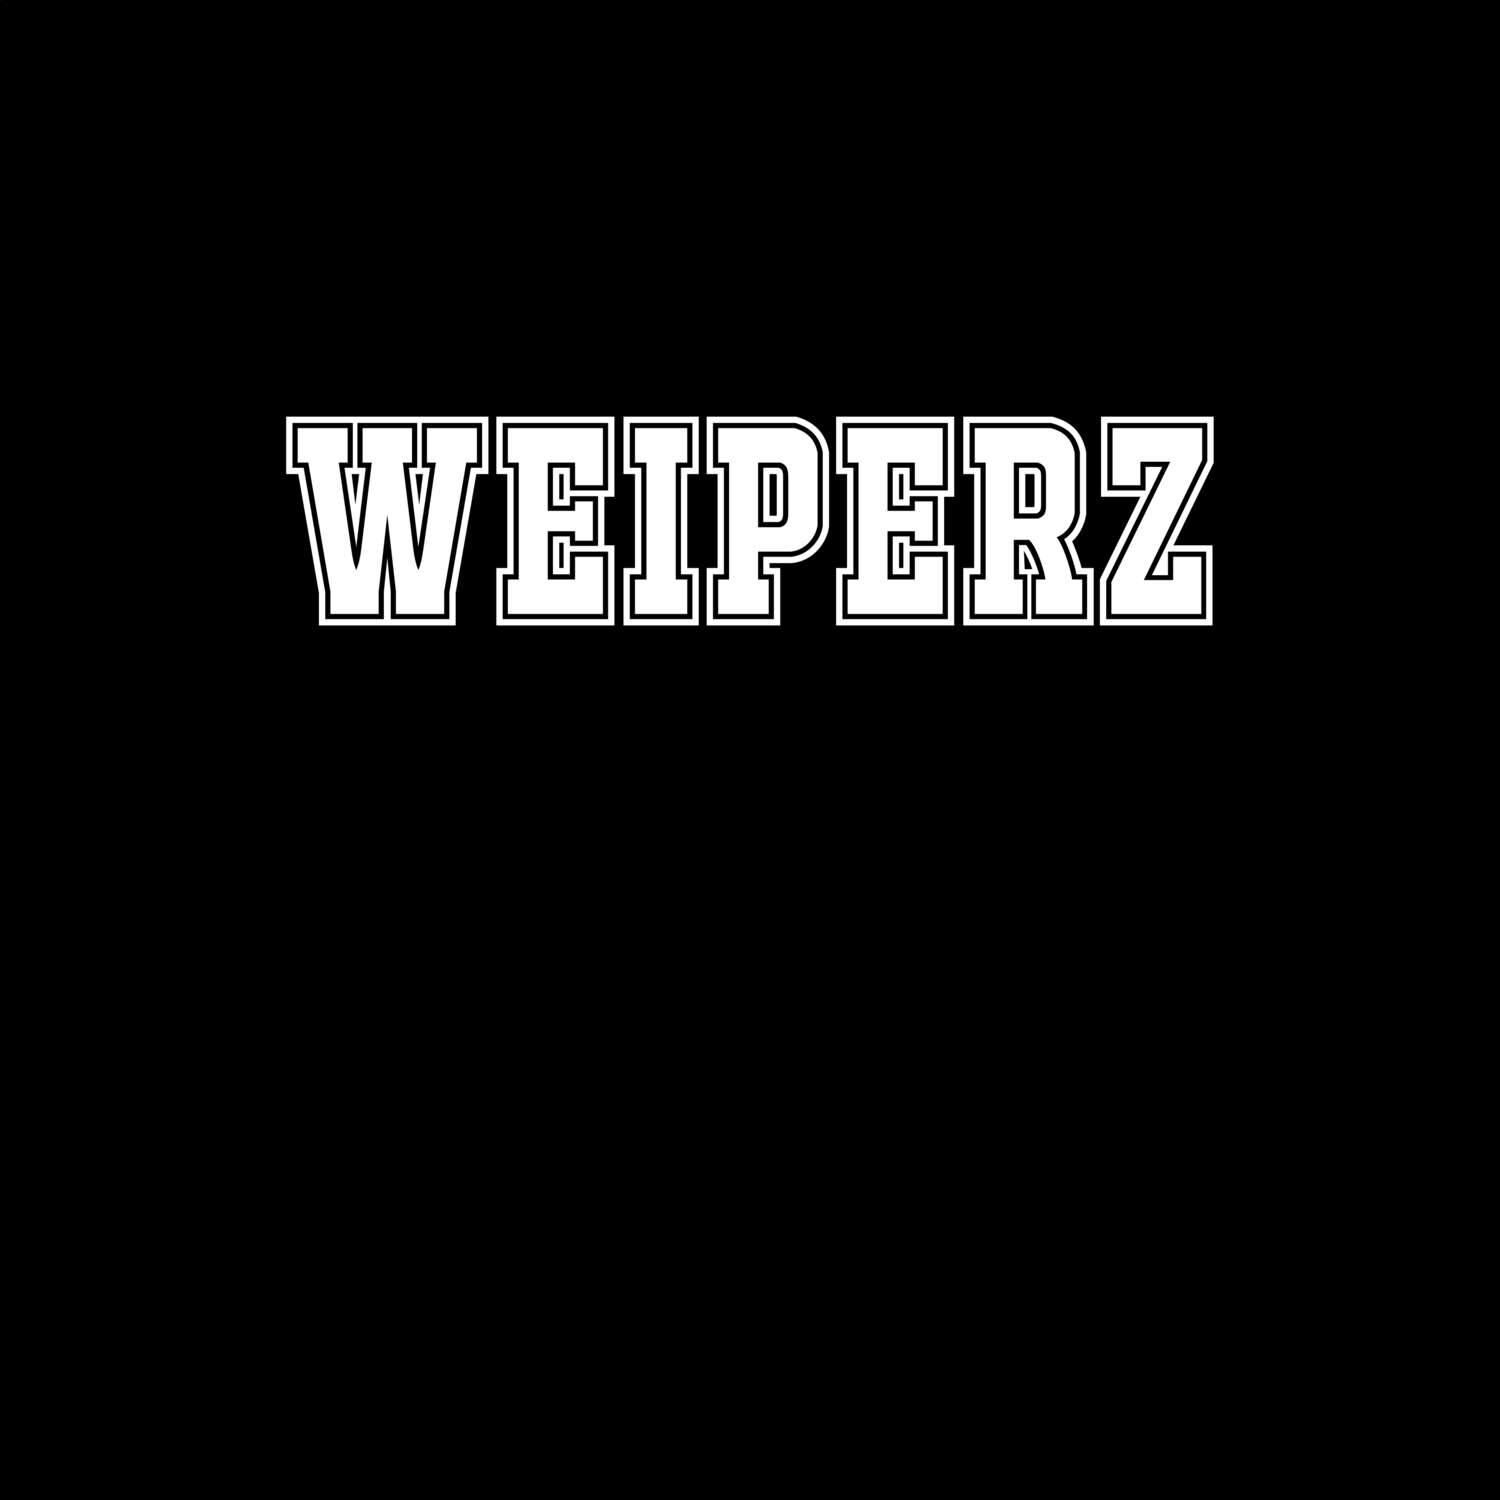 Weiperz T-Shirt »Classic«